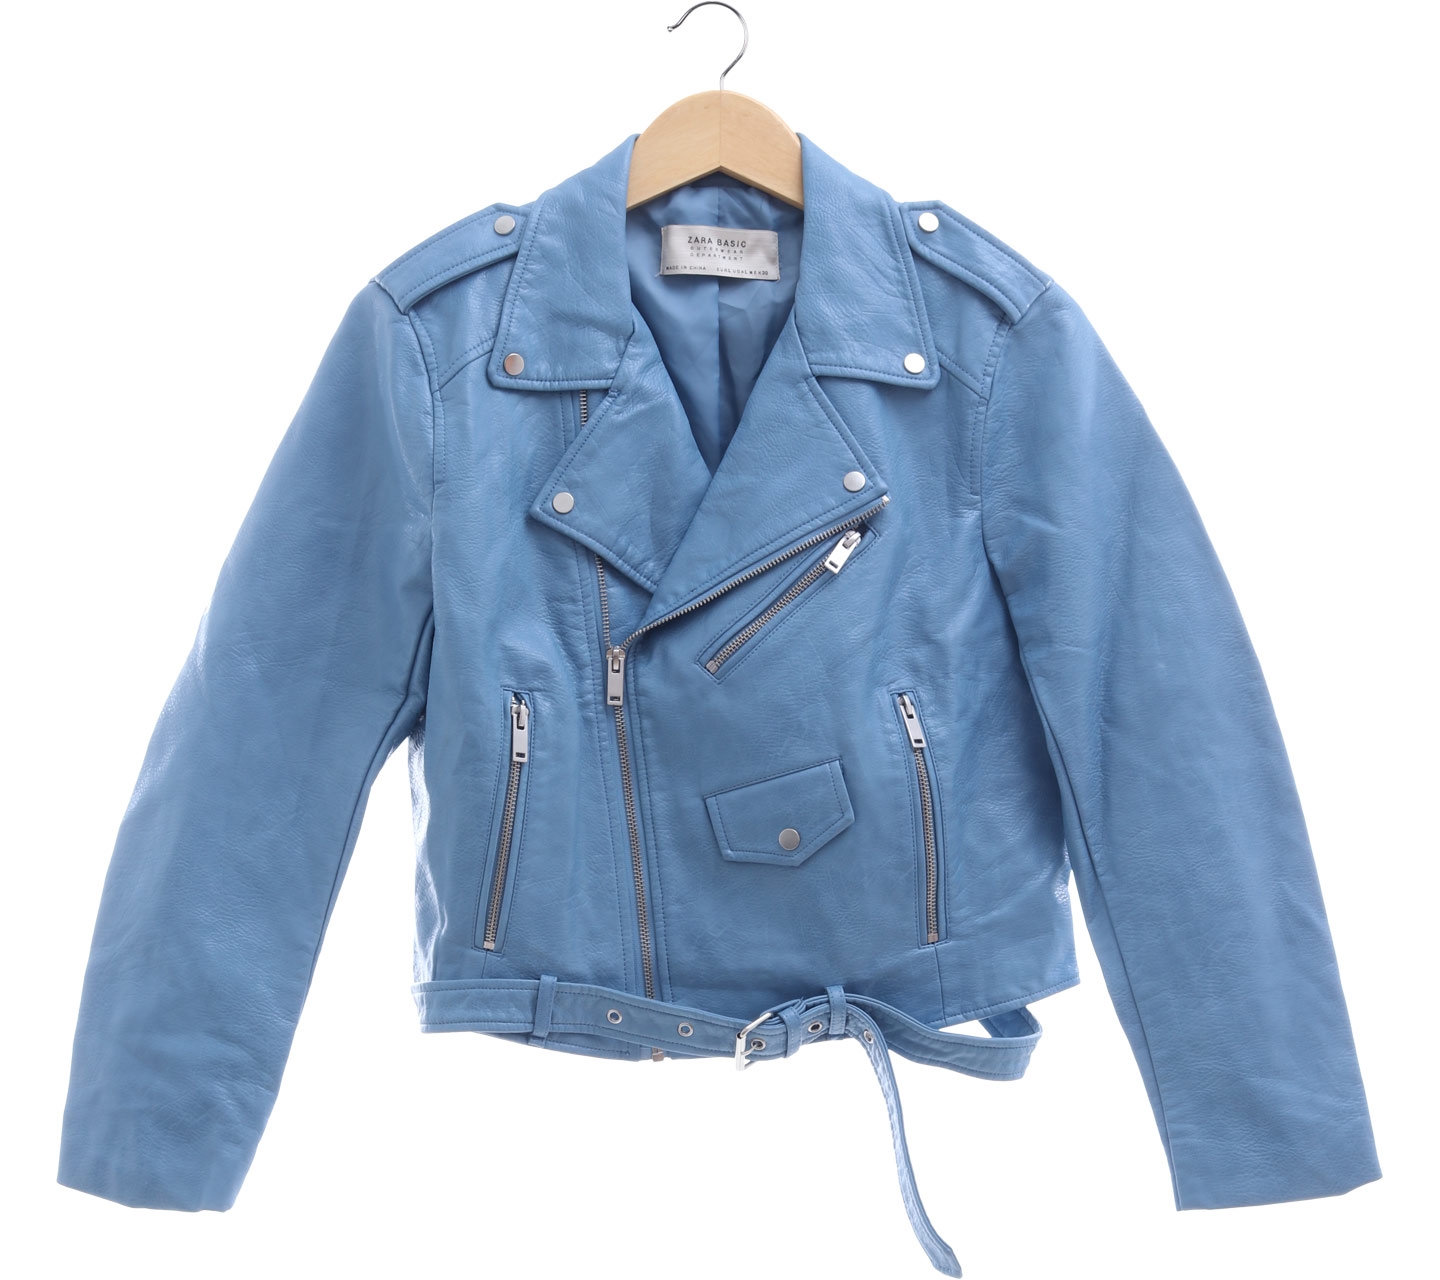 Zara Light Blue Jacket